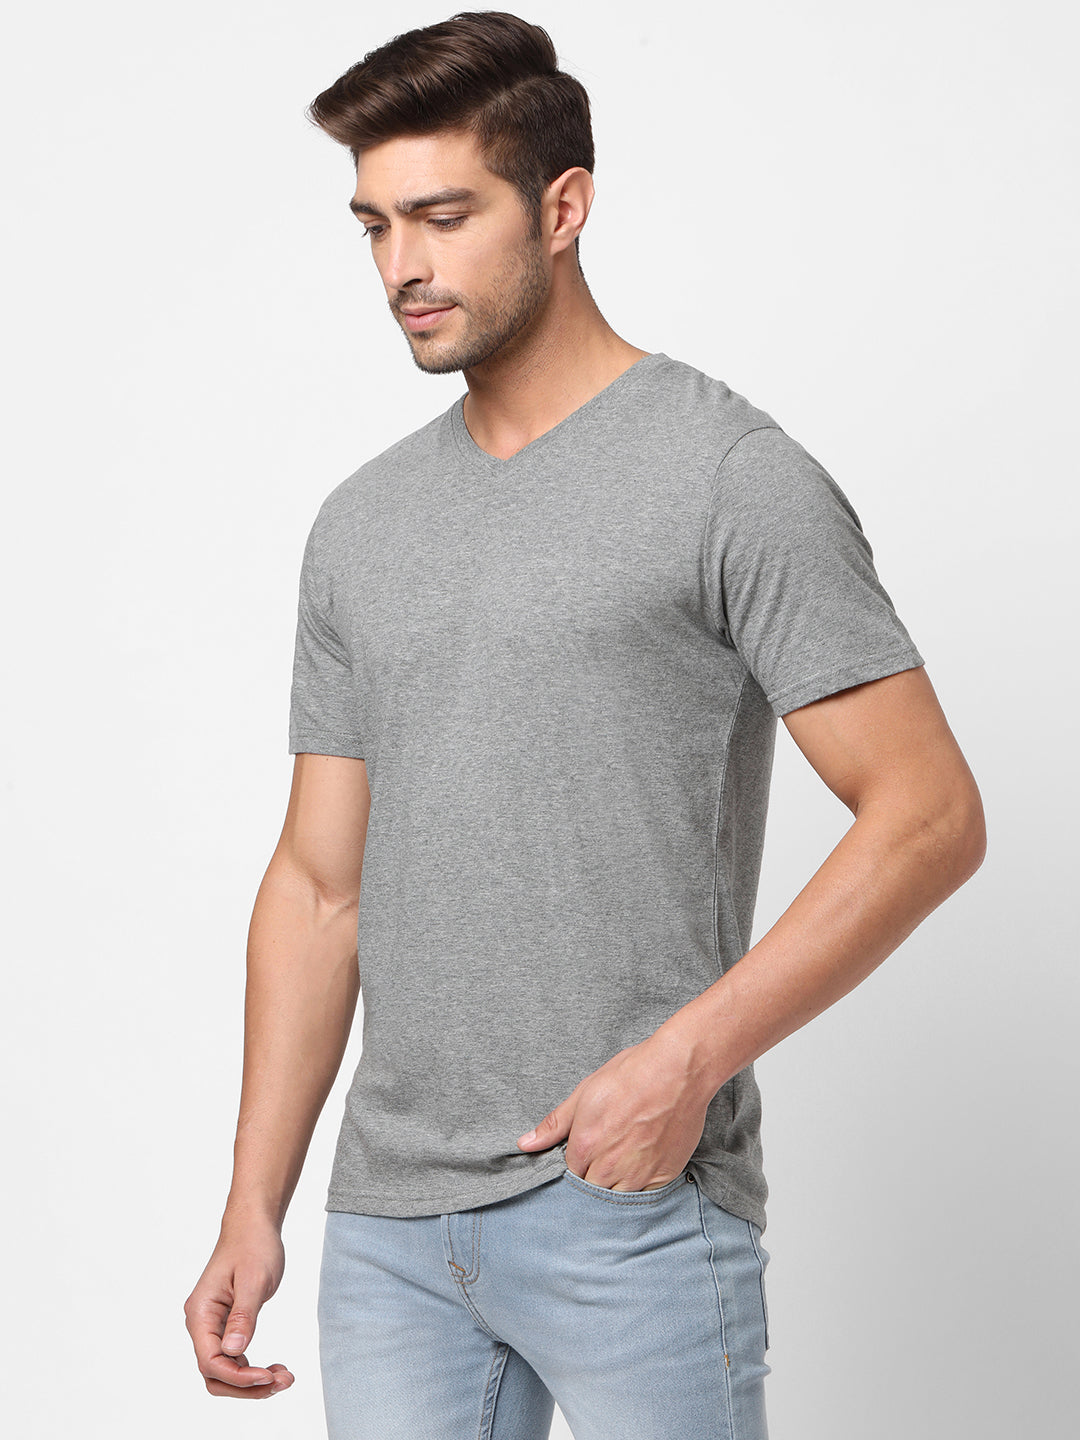 Mens 100% Cotton V Neck Light Grey Tshirt